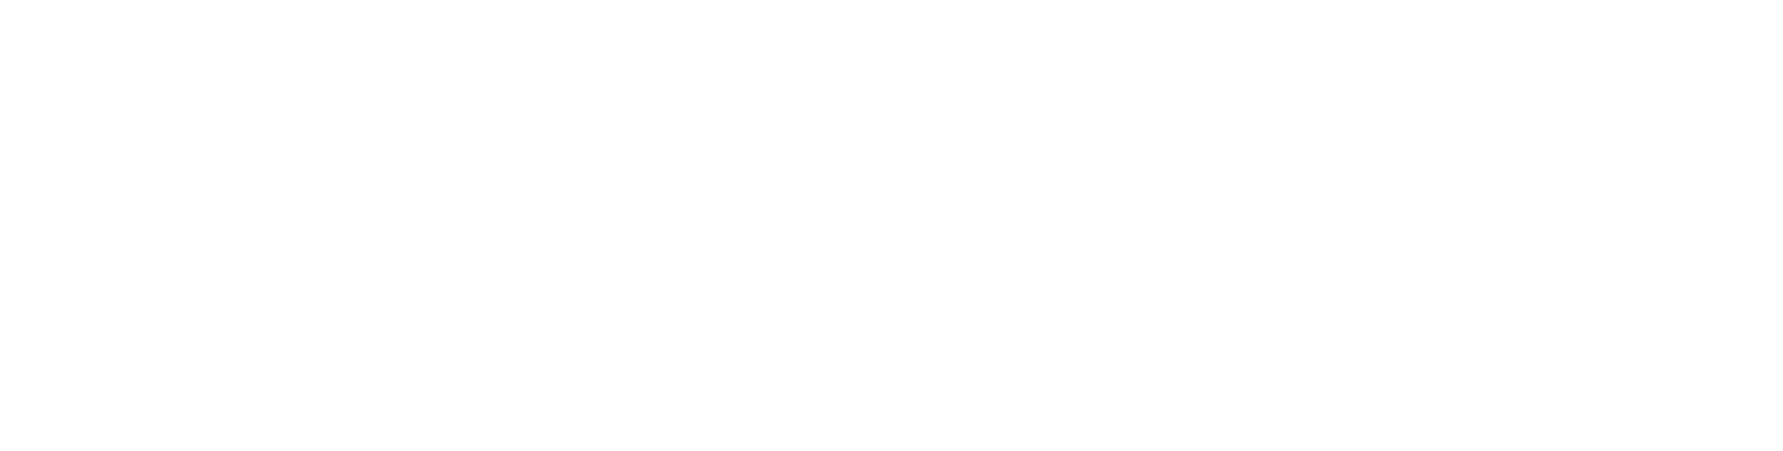 Missouri Health Connect